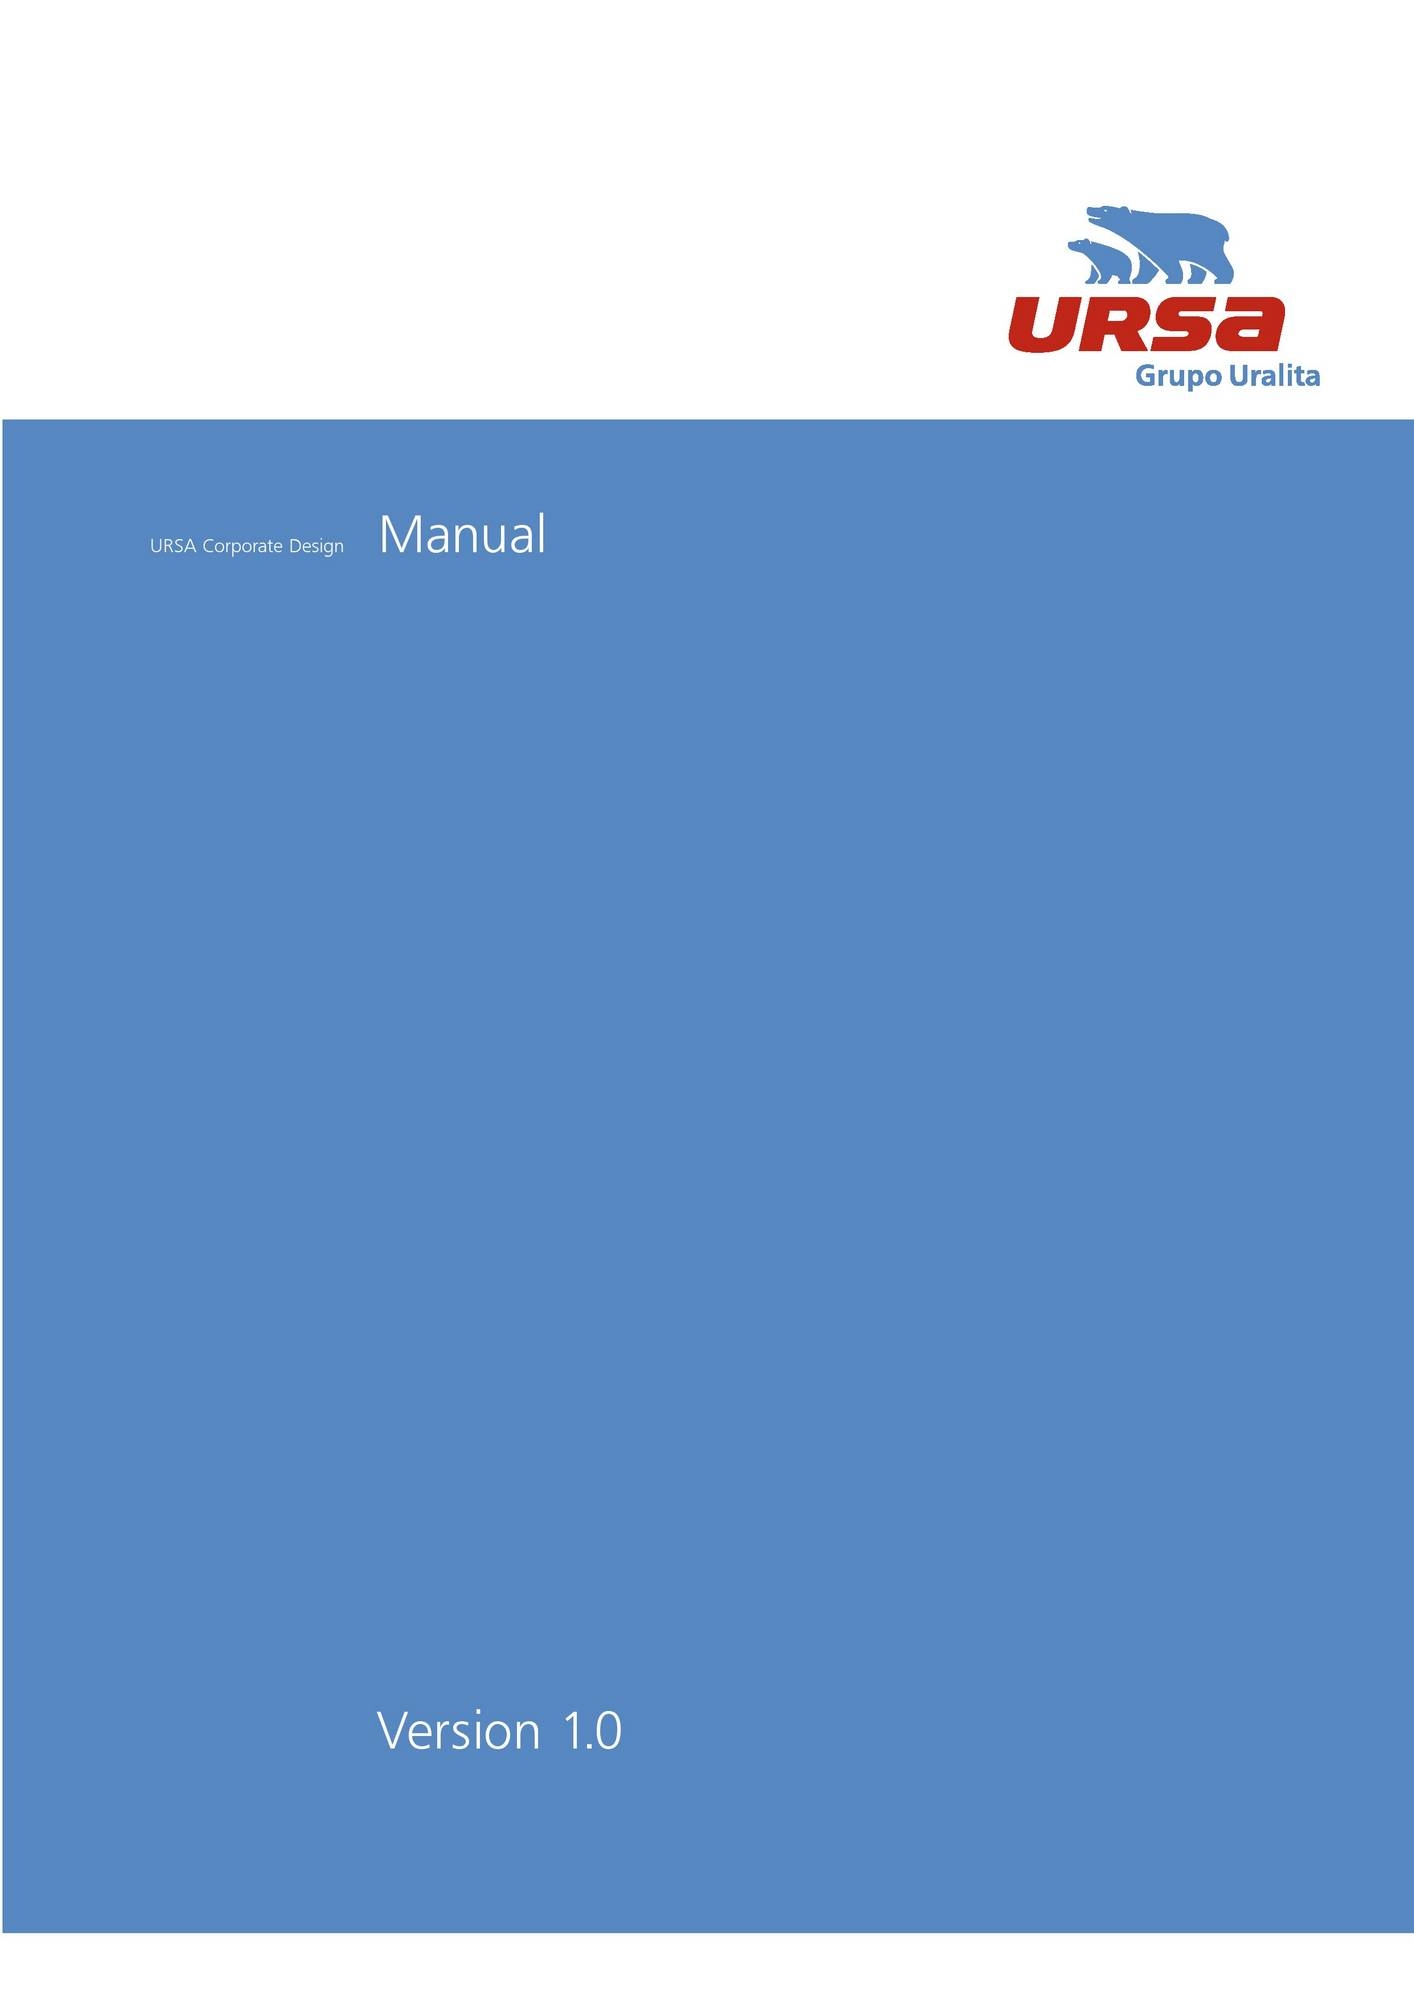 URSA Group Uralita Corporate Design Manual